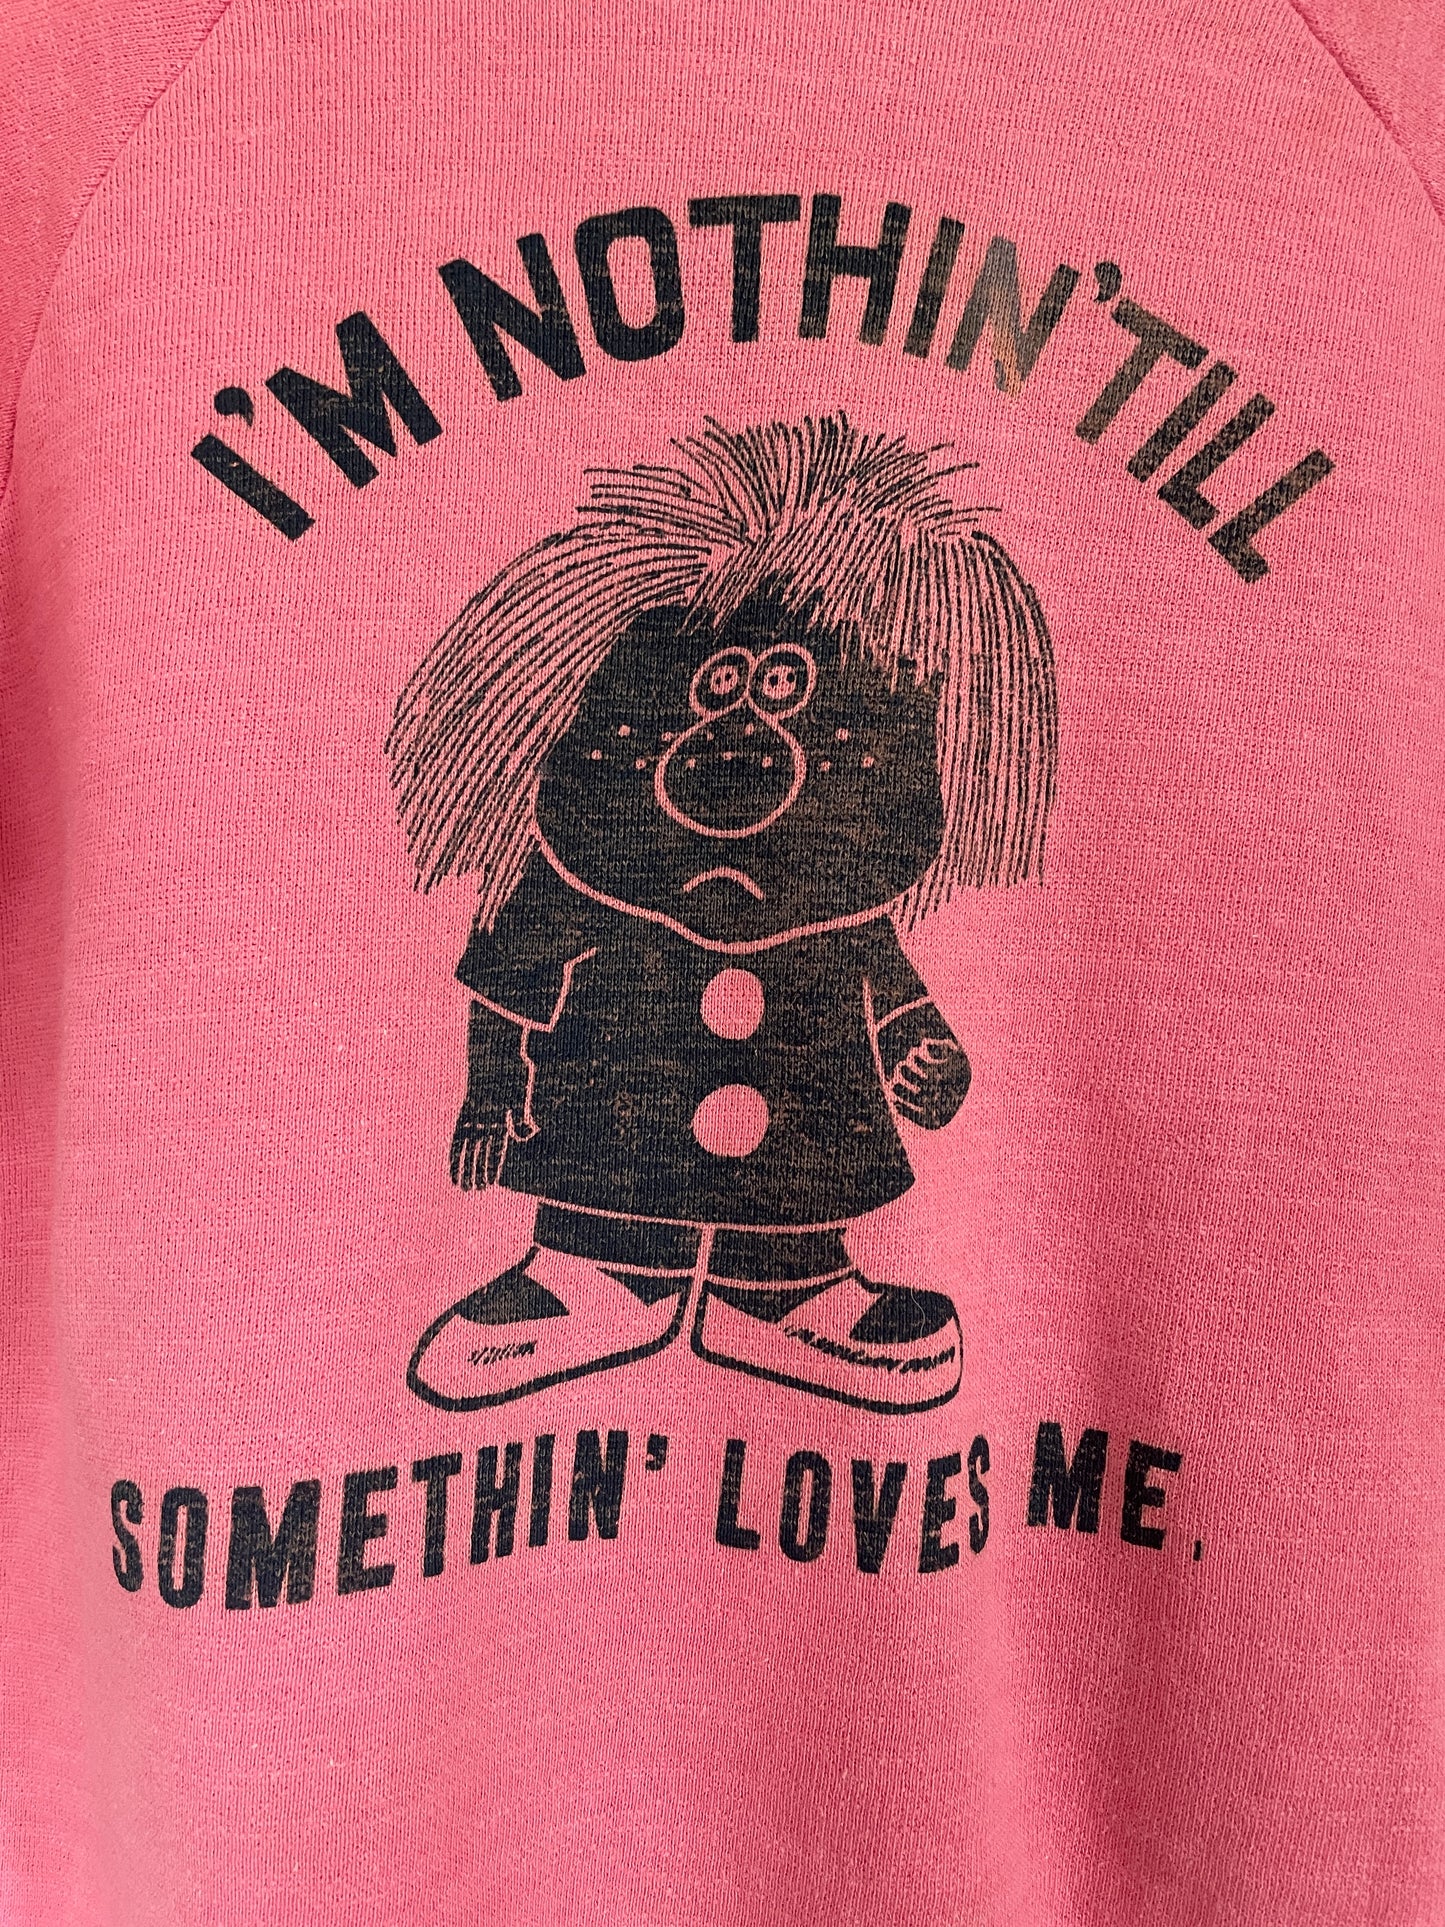 60s I’m Nothin’ Till Somethin’ Loves Me Sweatshirt